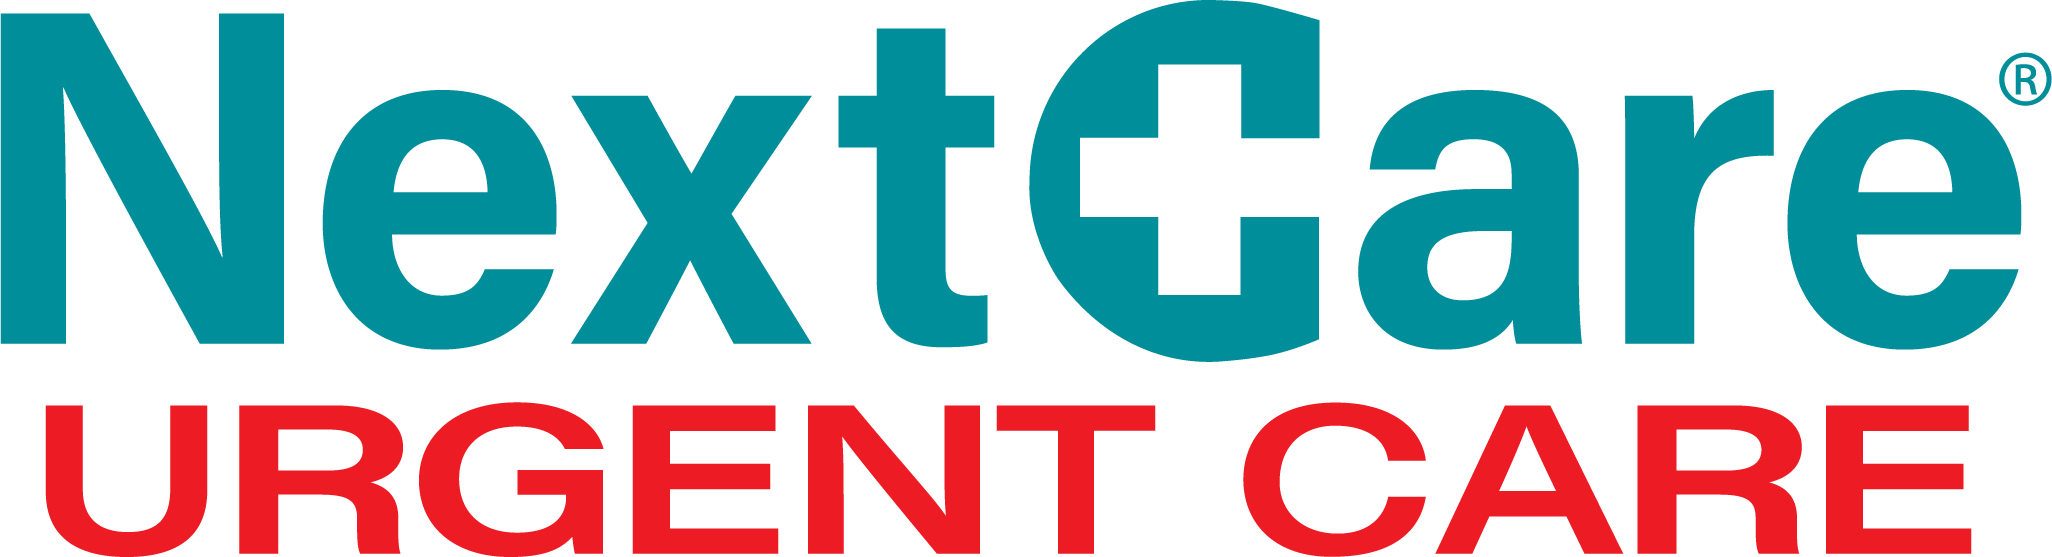 NextCare Urgent Care - Carefree Logo